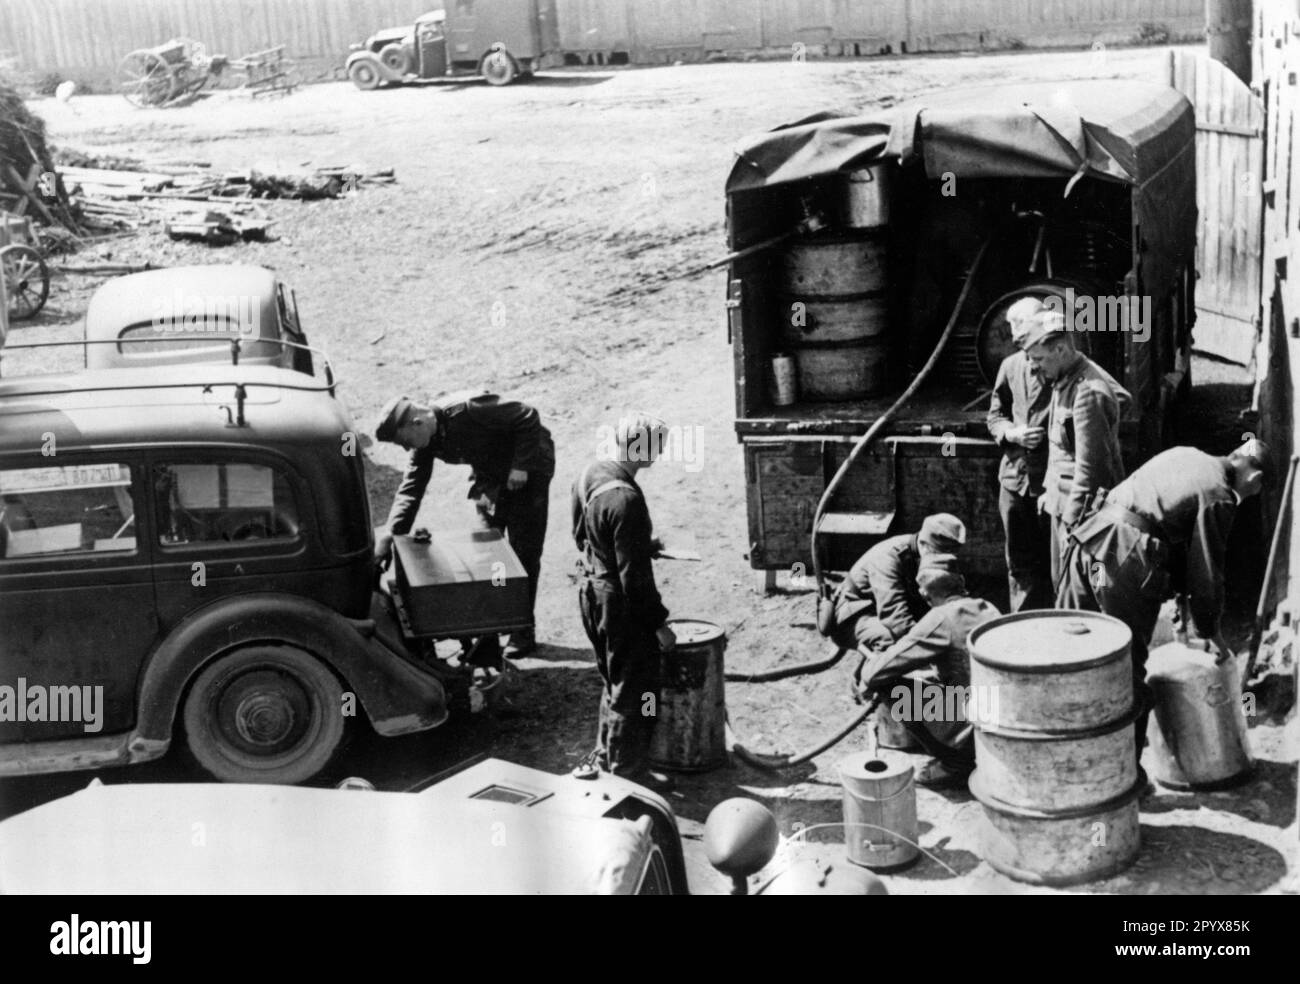 World war ii gasoline barrels hi-res stock photography and images - Alamy